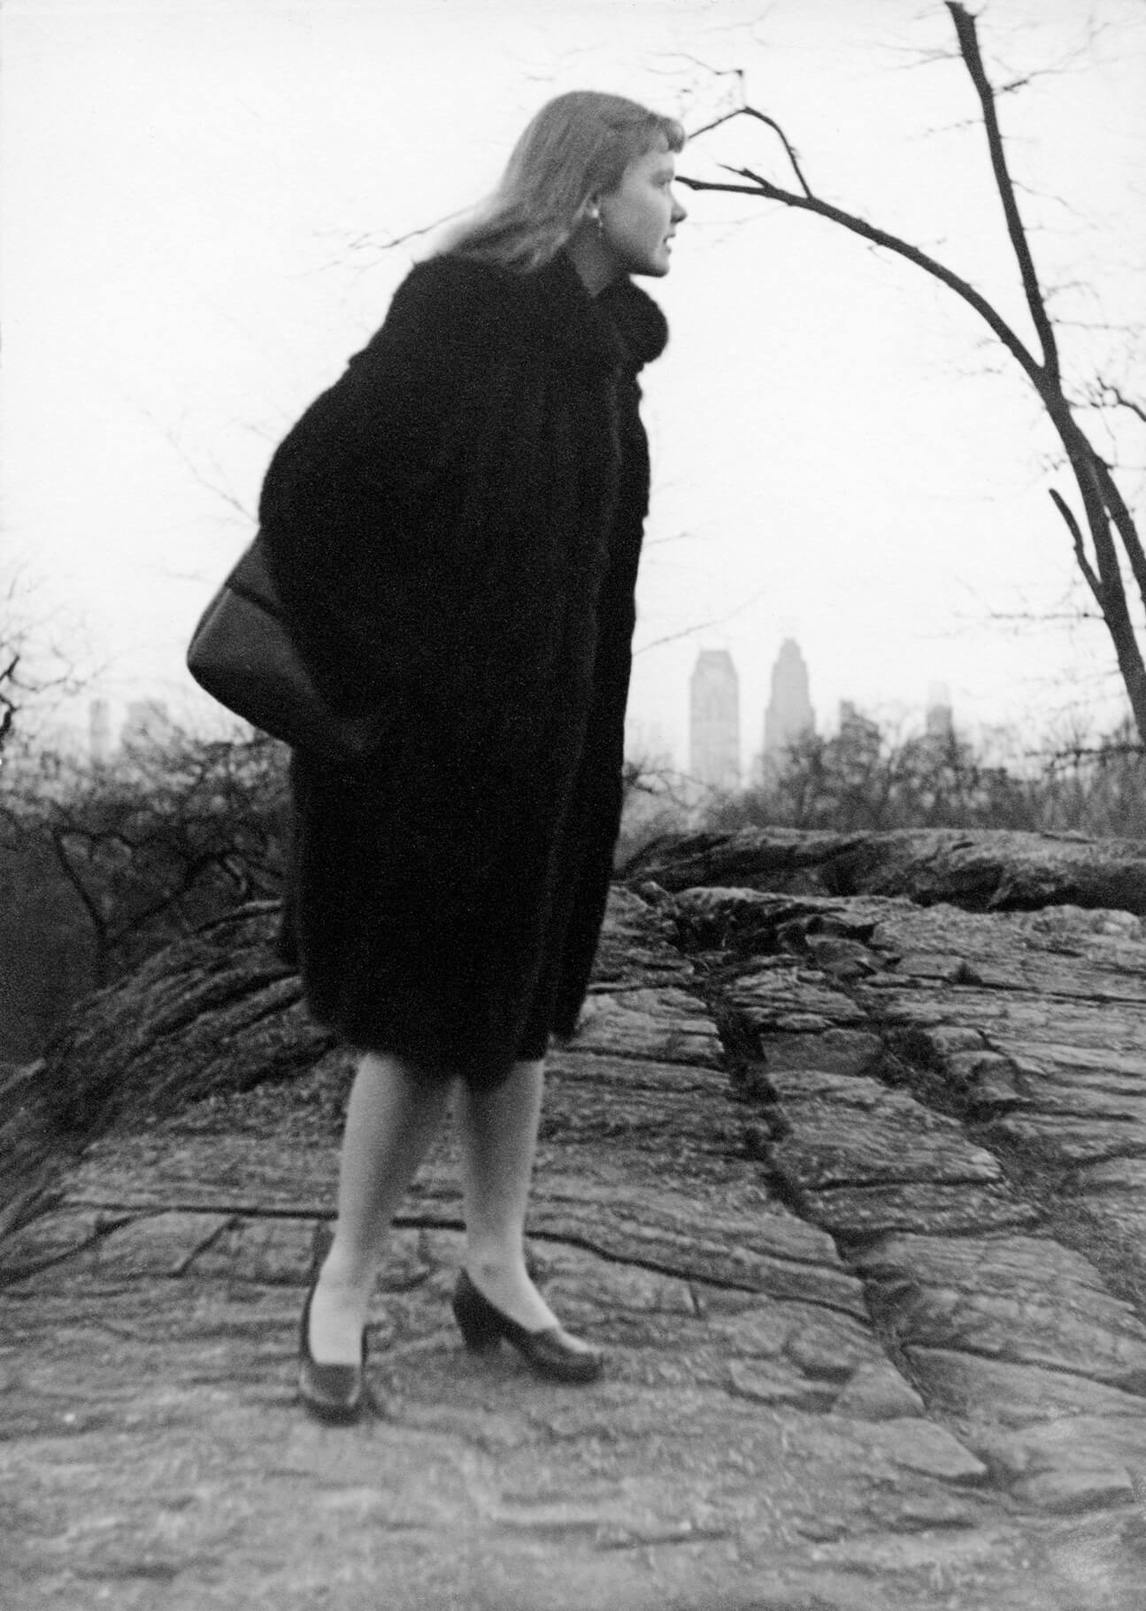 Françoise Sullivan in Central Park, New York, c. 1946. Photograph by Laredo.